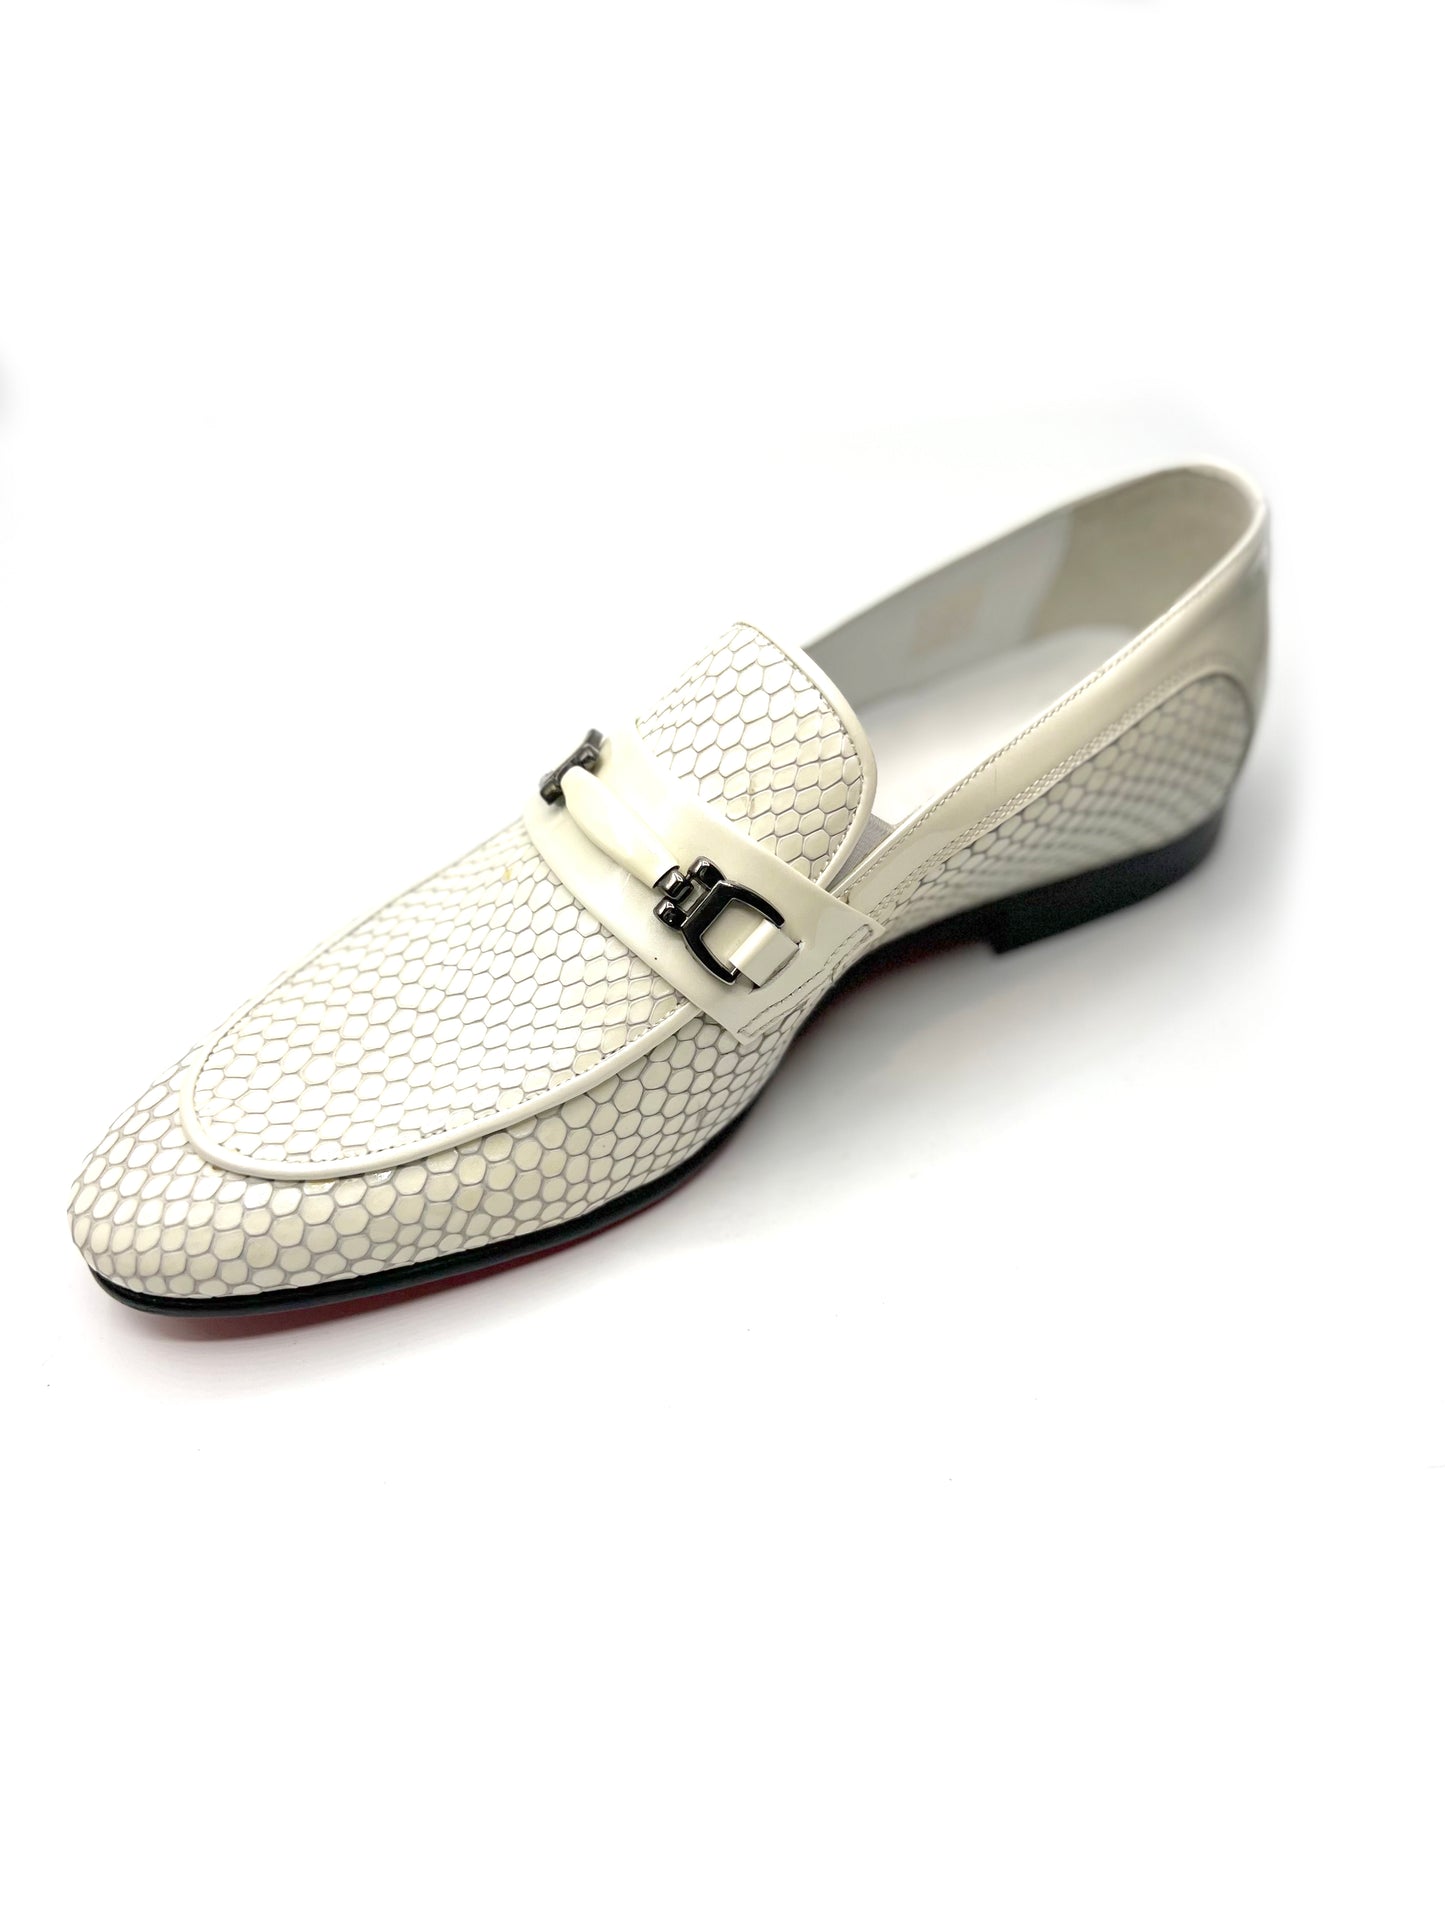 White shiny shoe